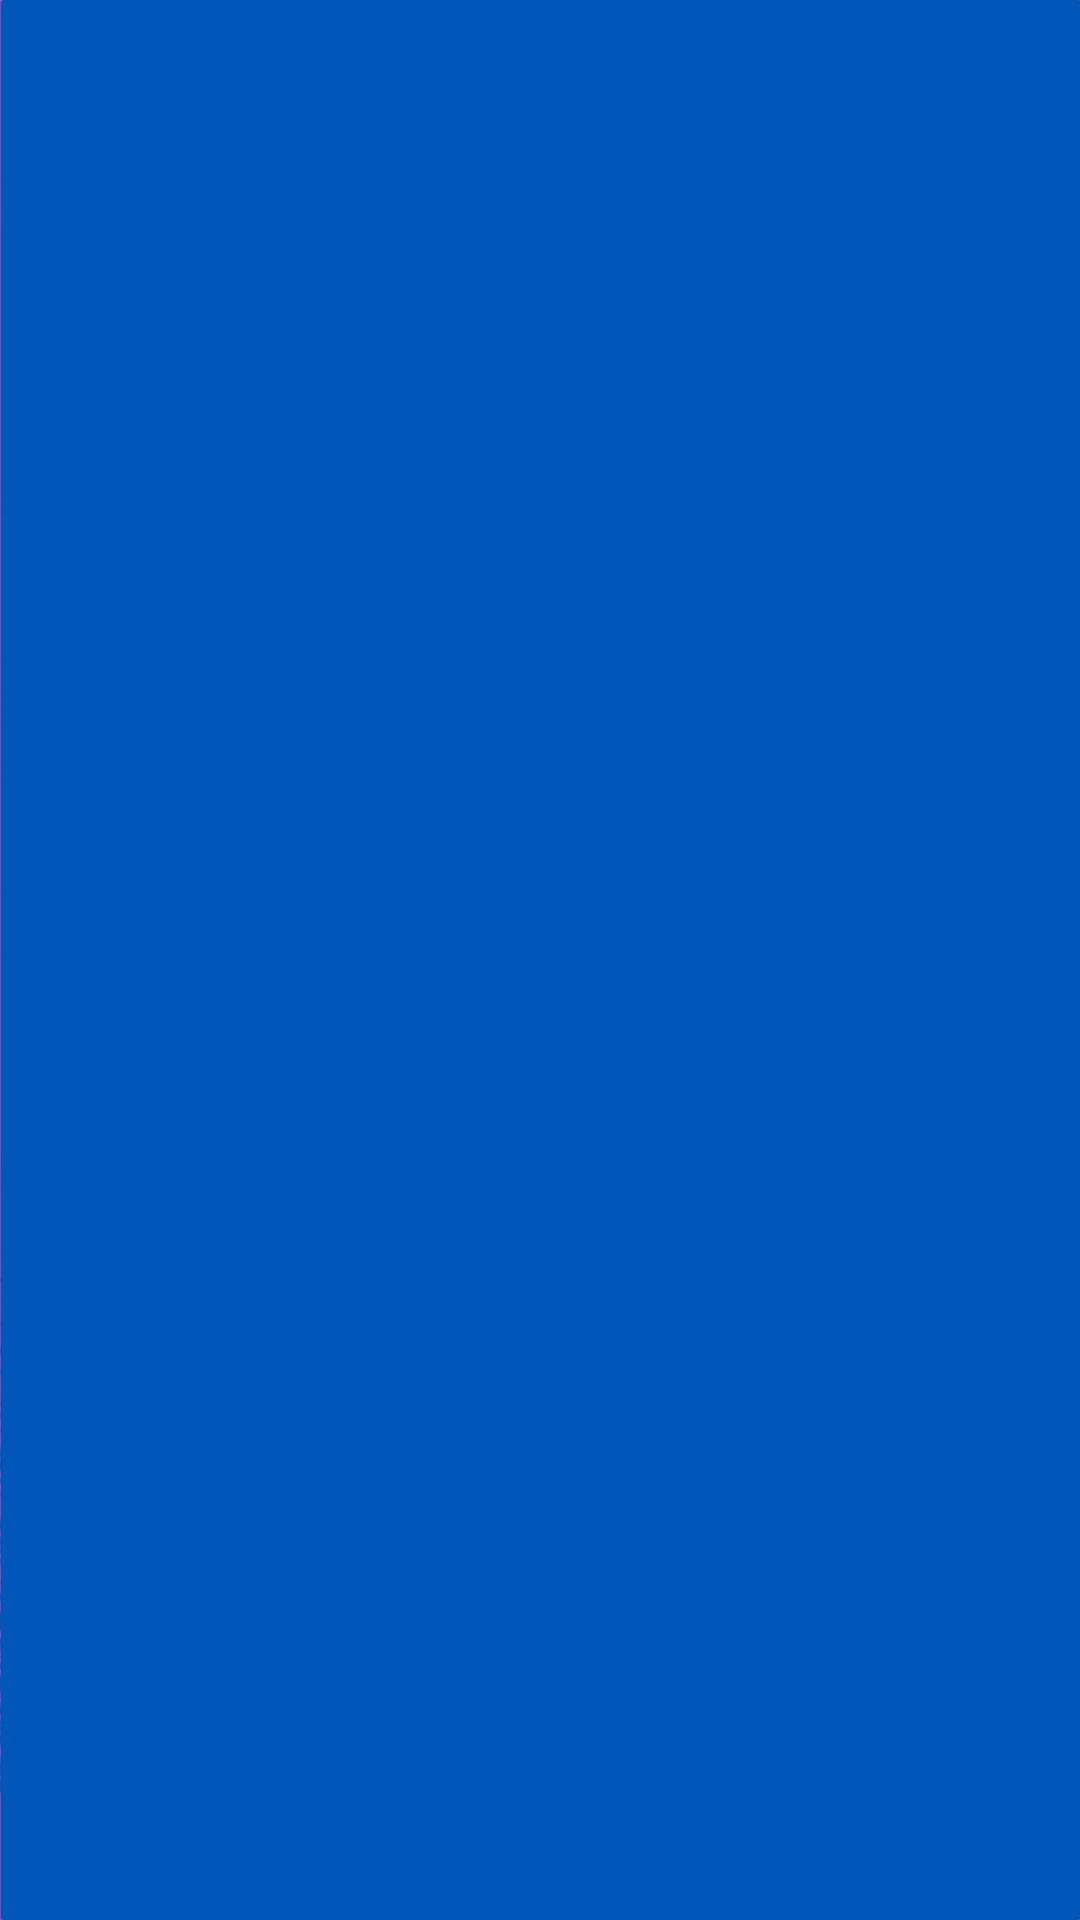 Minimalist Blue Iphone Background